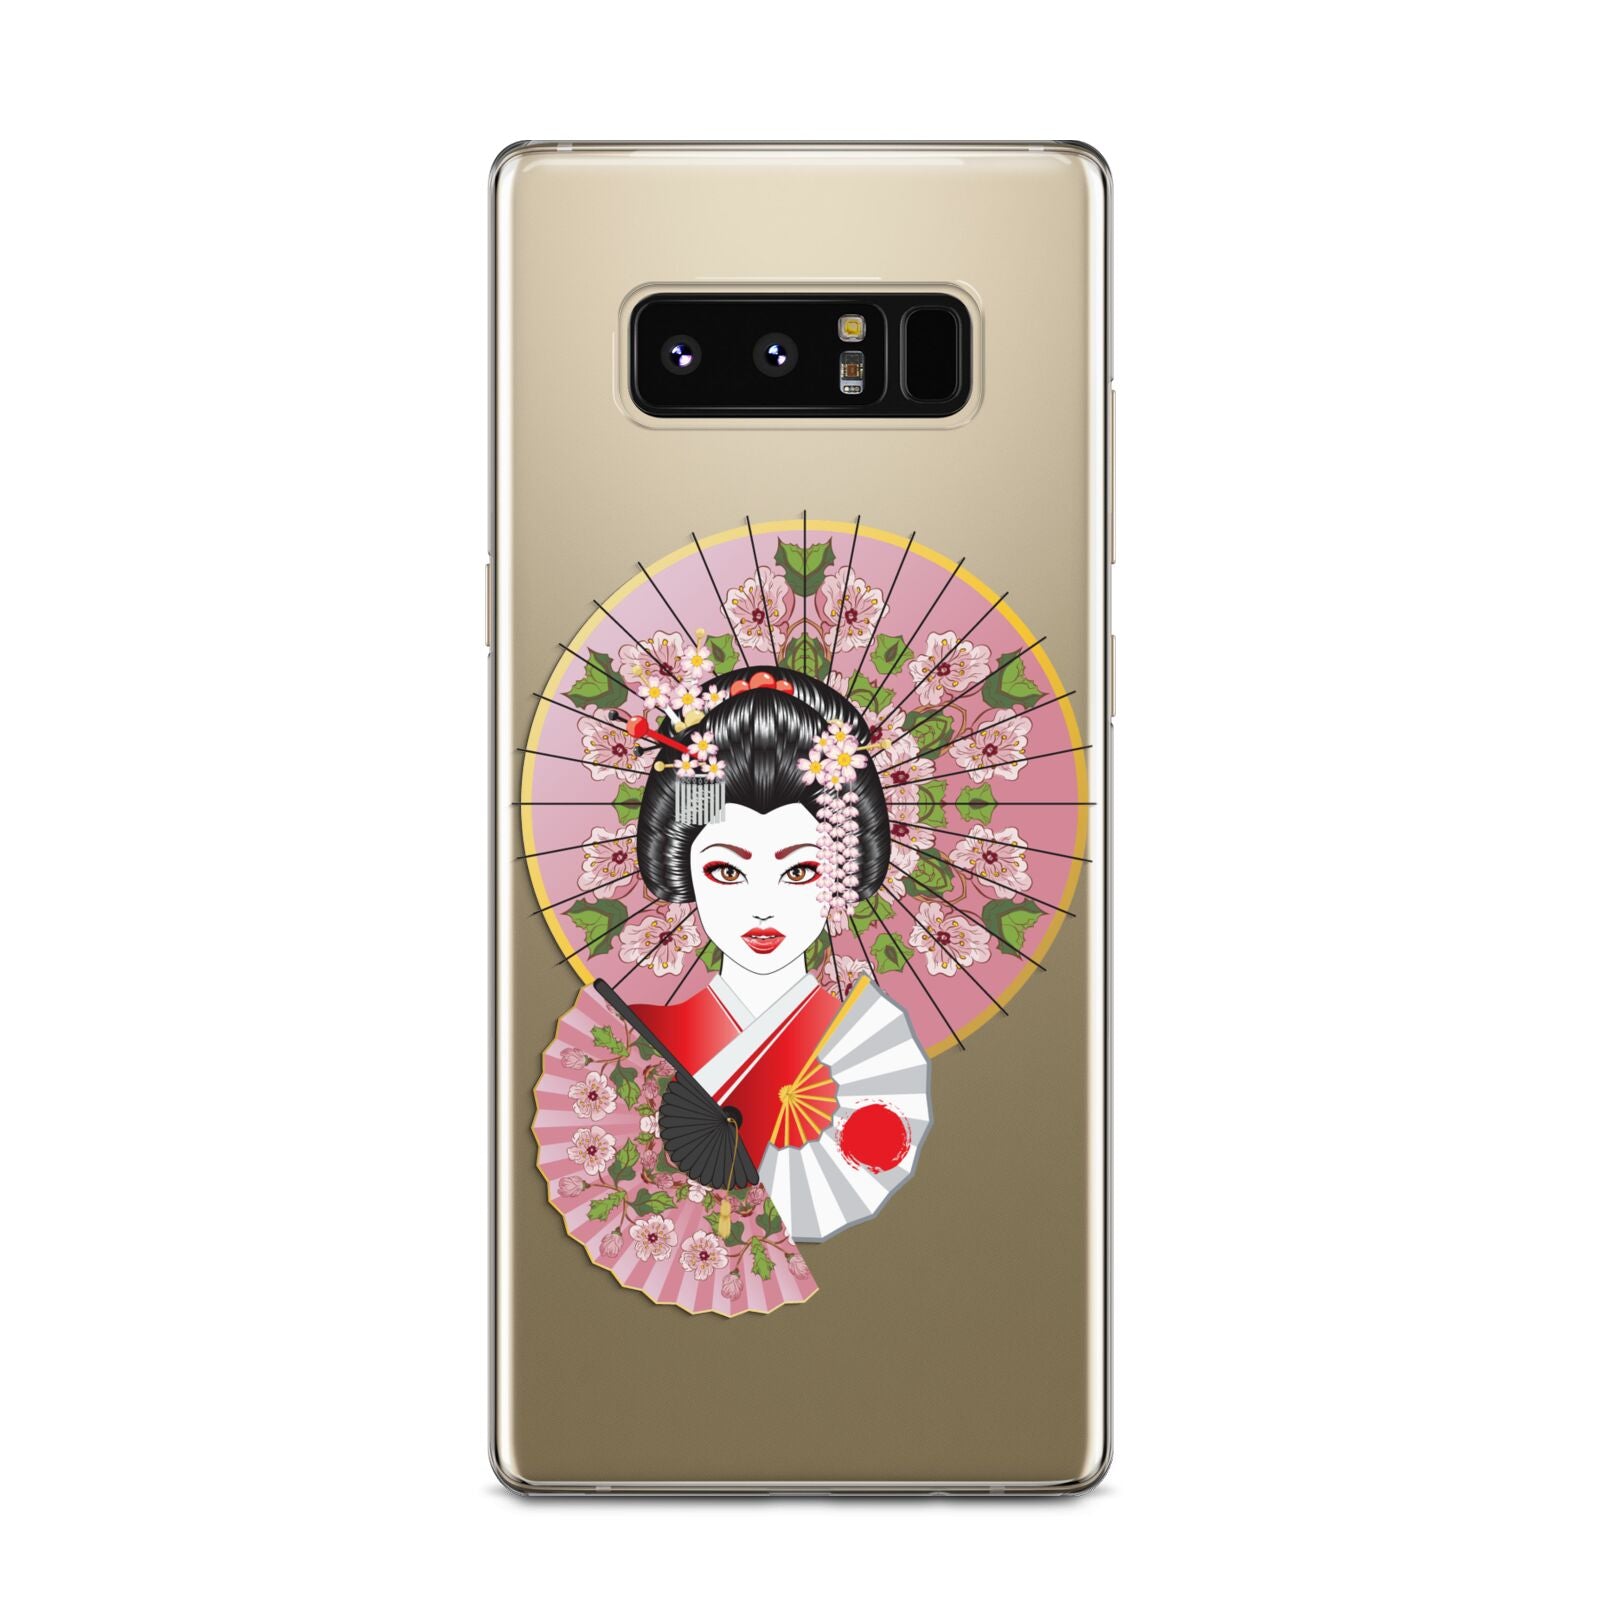 Geisha Girl Samsung Galaxy Note 8 Case